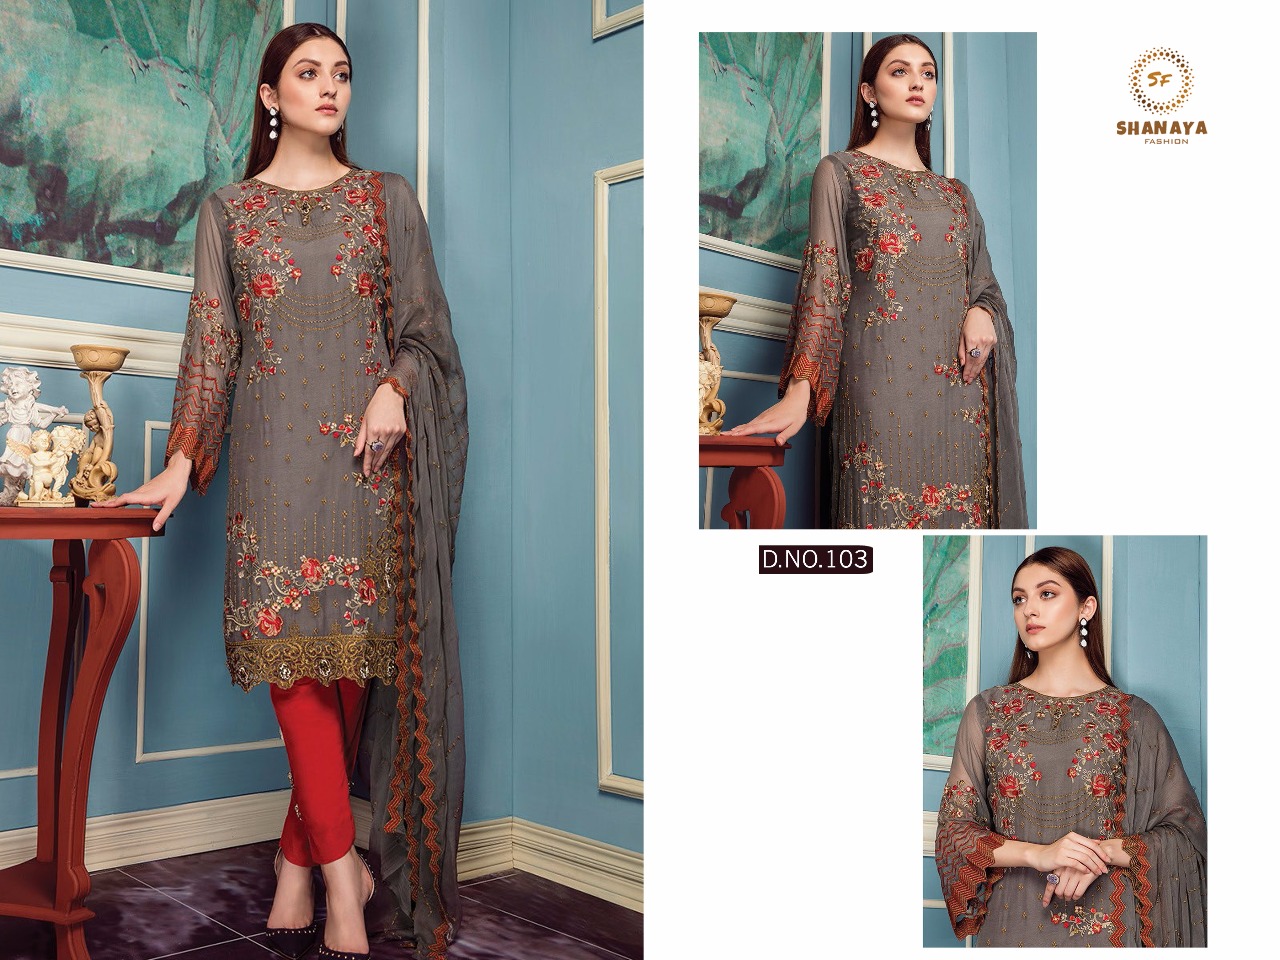 Shanaya fashion presents rose luxury art new pakistani concept salwar kameez collection